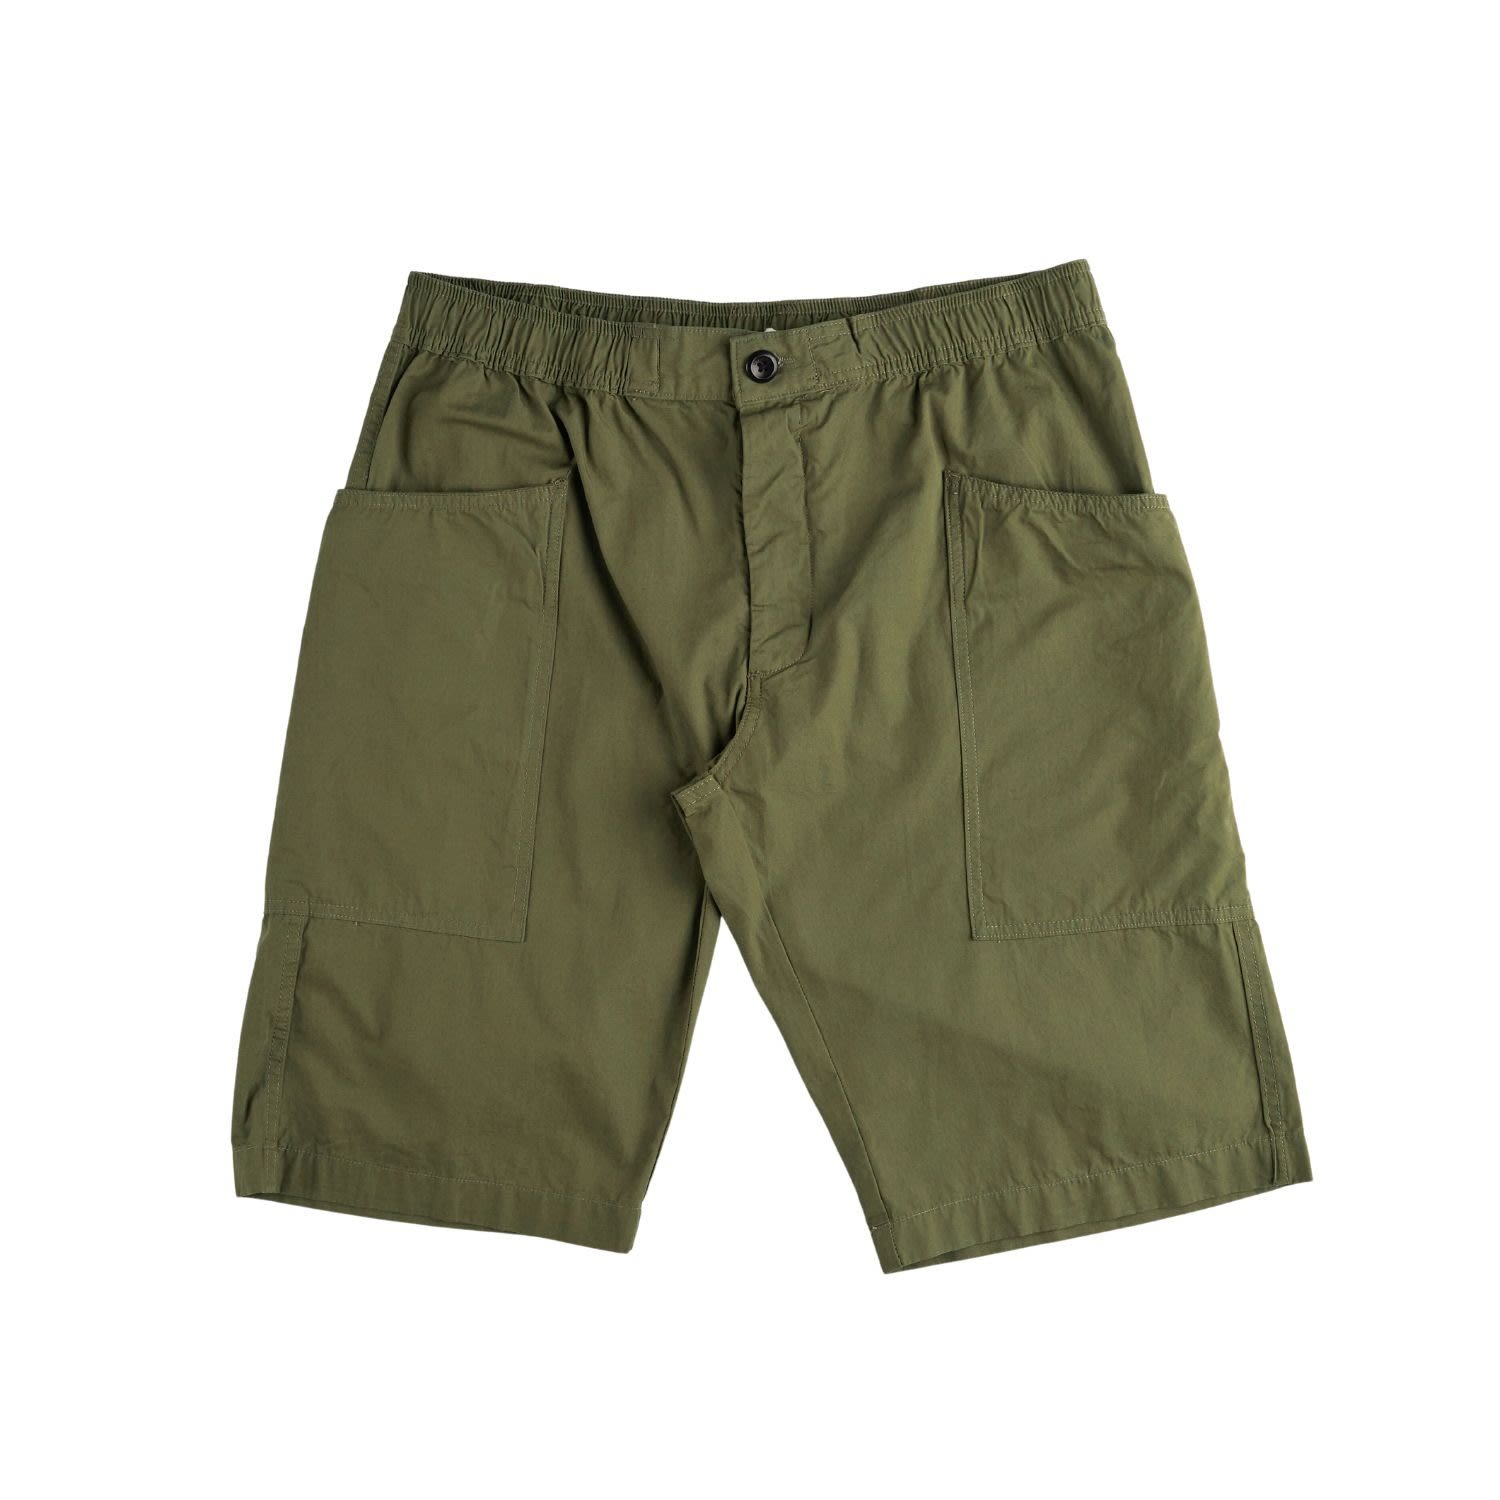 Uskees Men's Green 5015 Lightweight Shorts - Olive